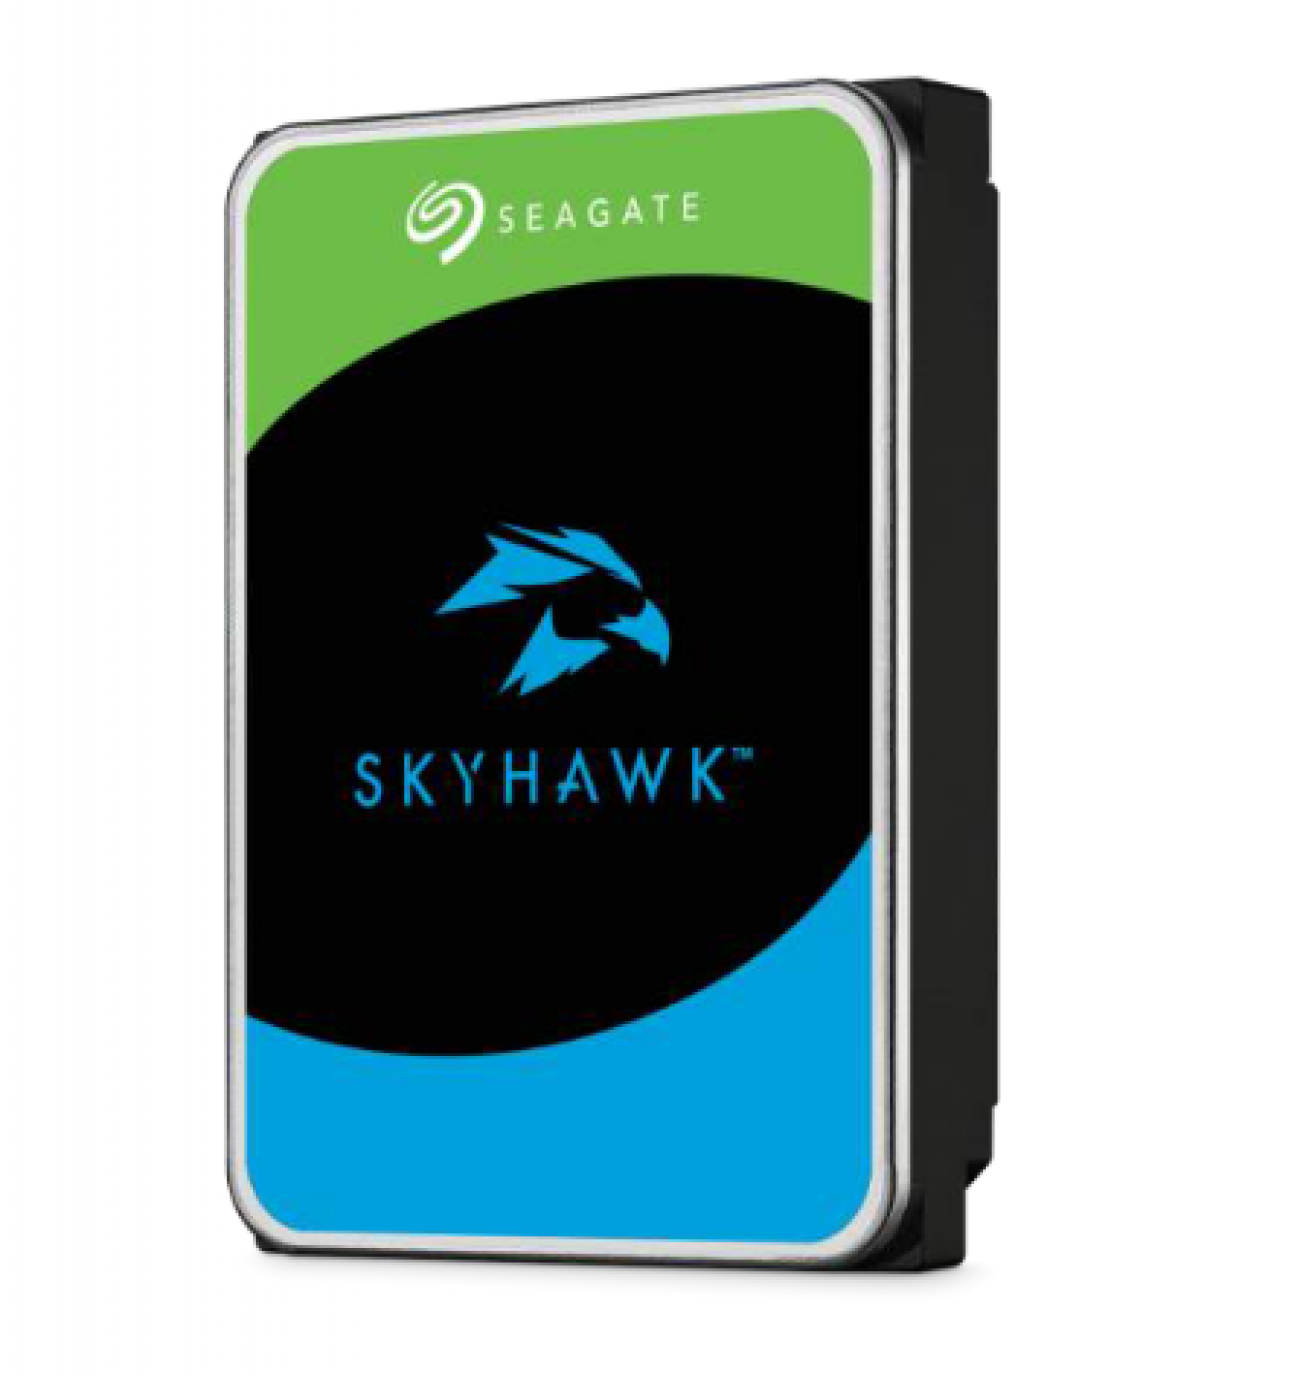 SEAGATE HDD SKYHAWK 4TB 3,5 SATA 6GB/S BUFFER 256MB SEAGATE